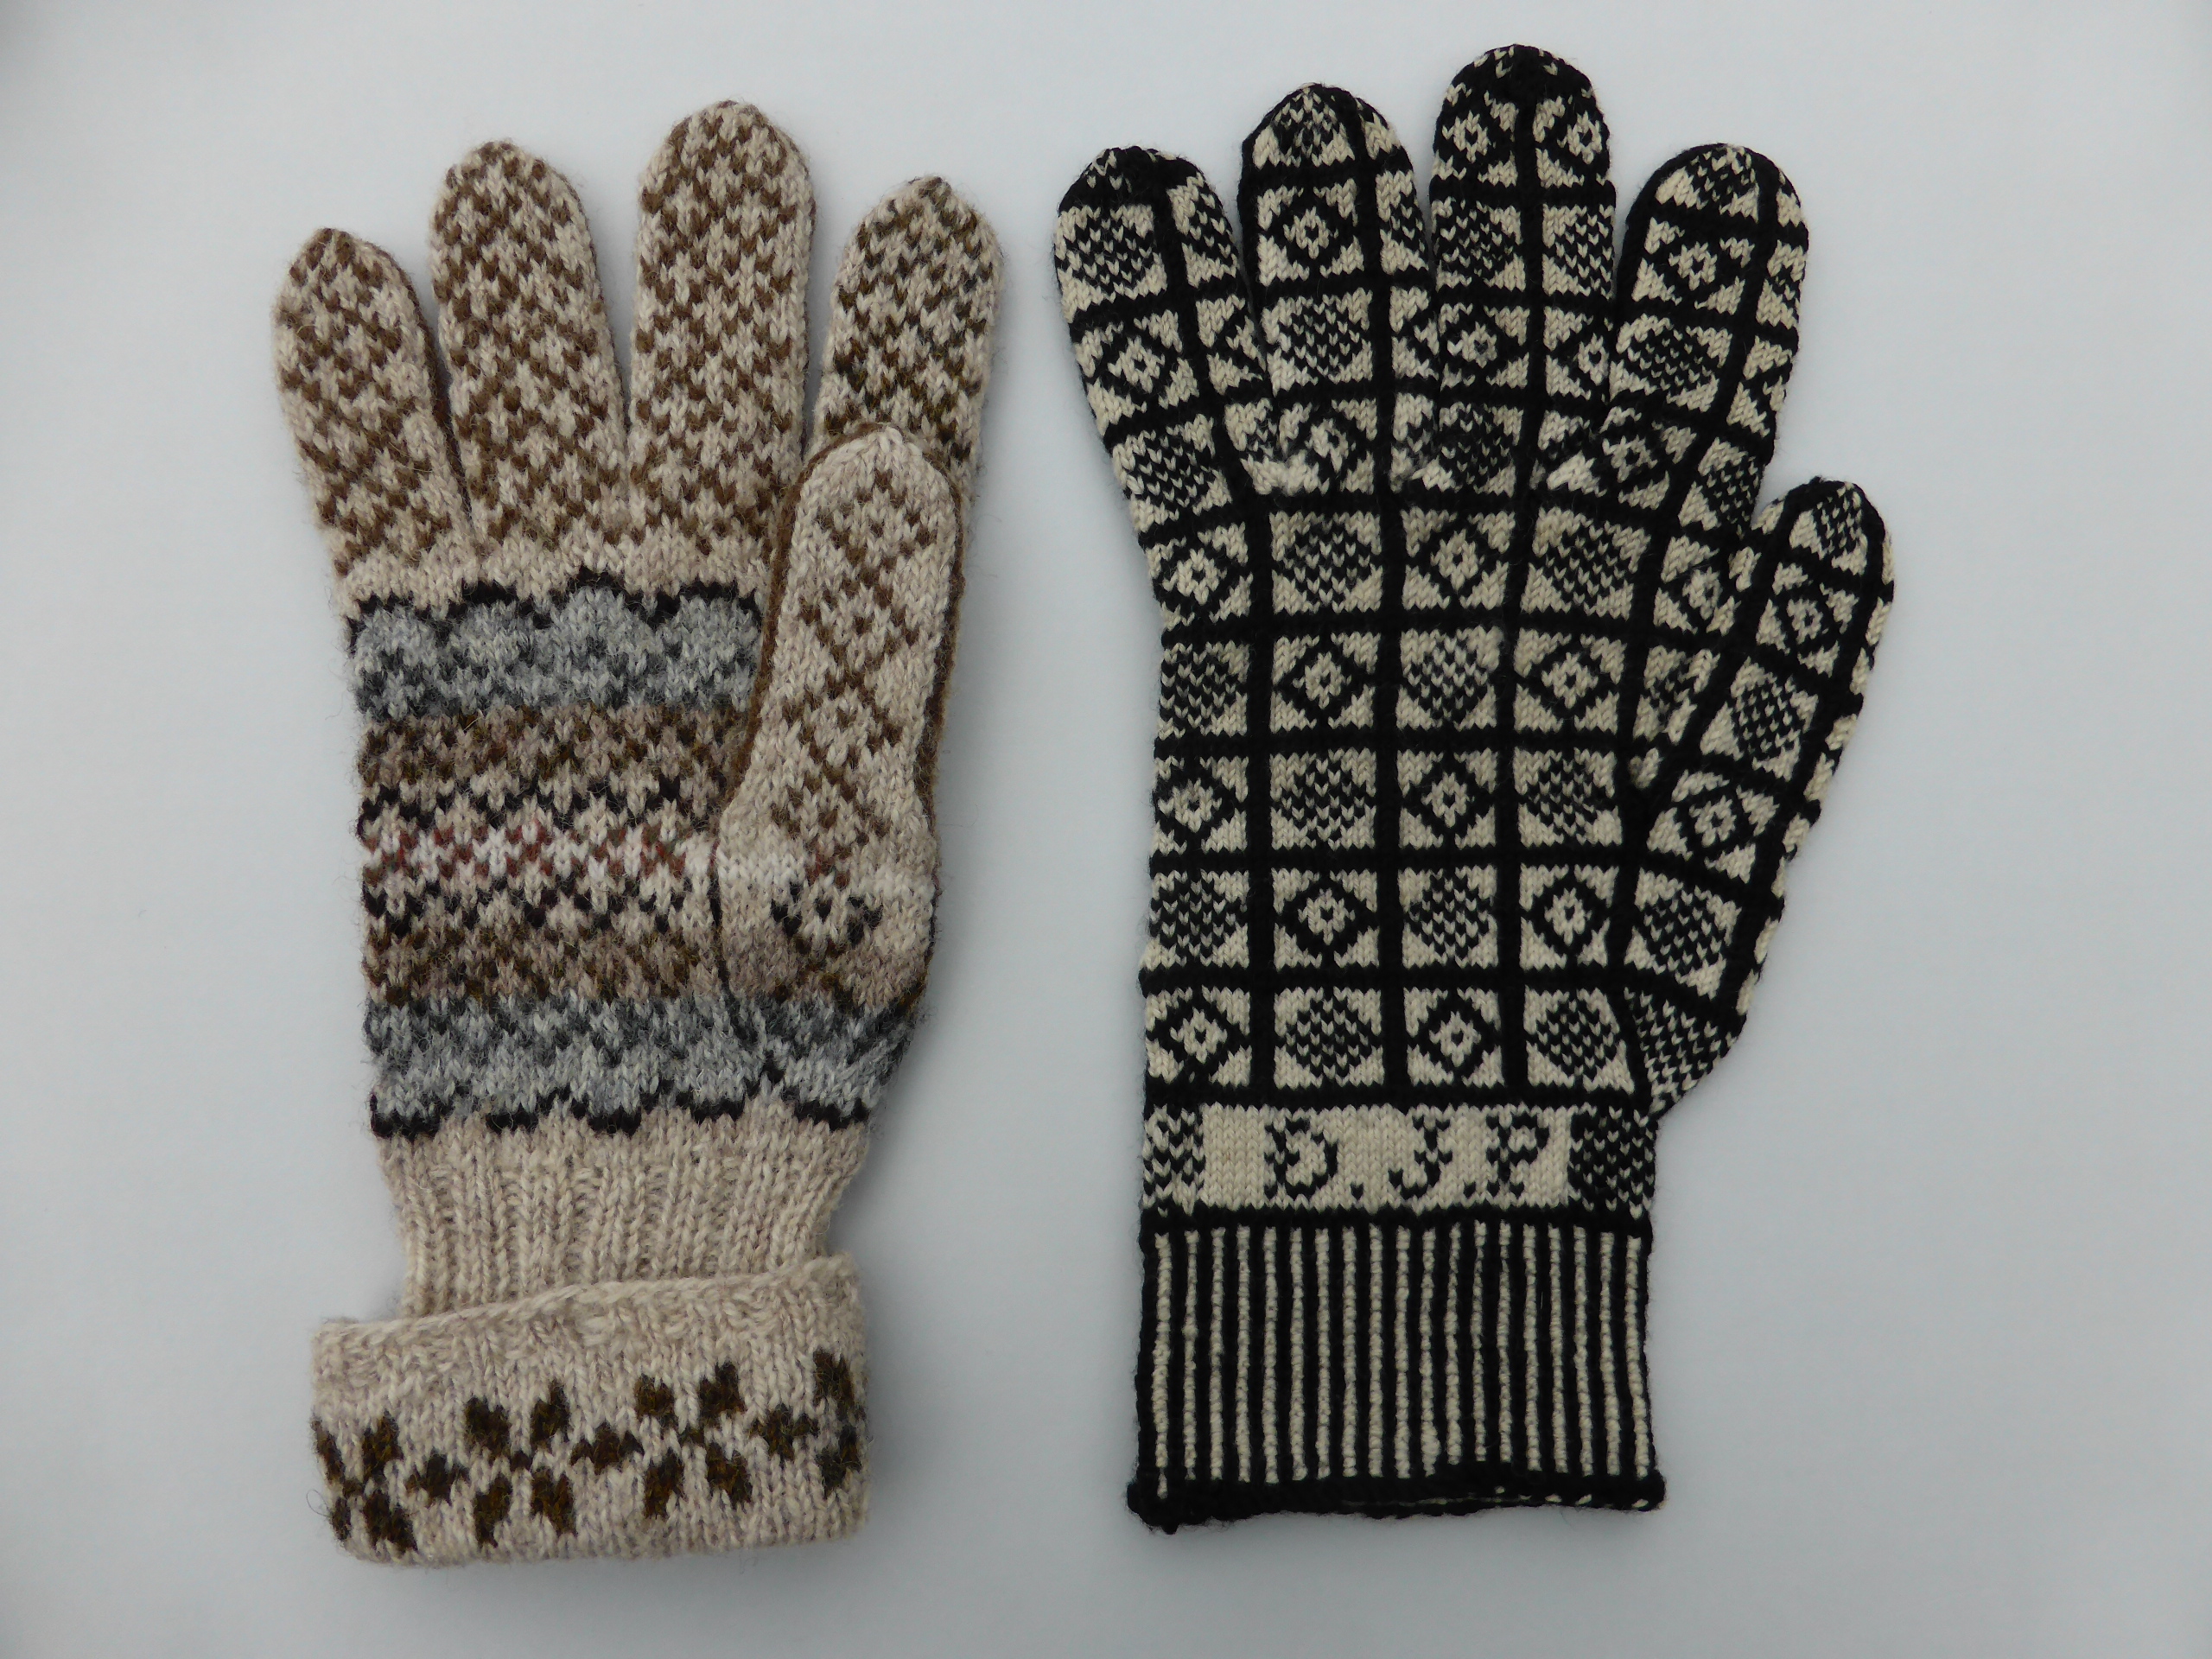 Shetland glove with Sanquhar glove, palms. [Sanquhar glove, collection of KCG, UK. Shetland glove, collection of Angharad Thomas].  (Photo: Angharad Thomas)